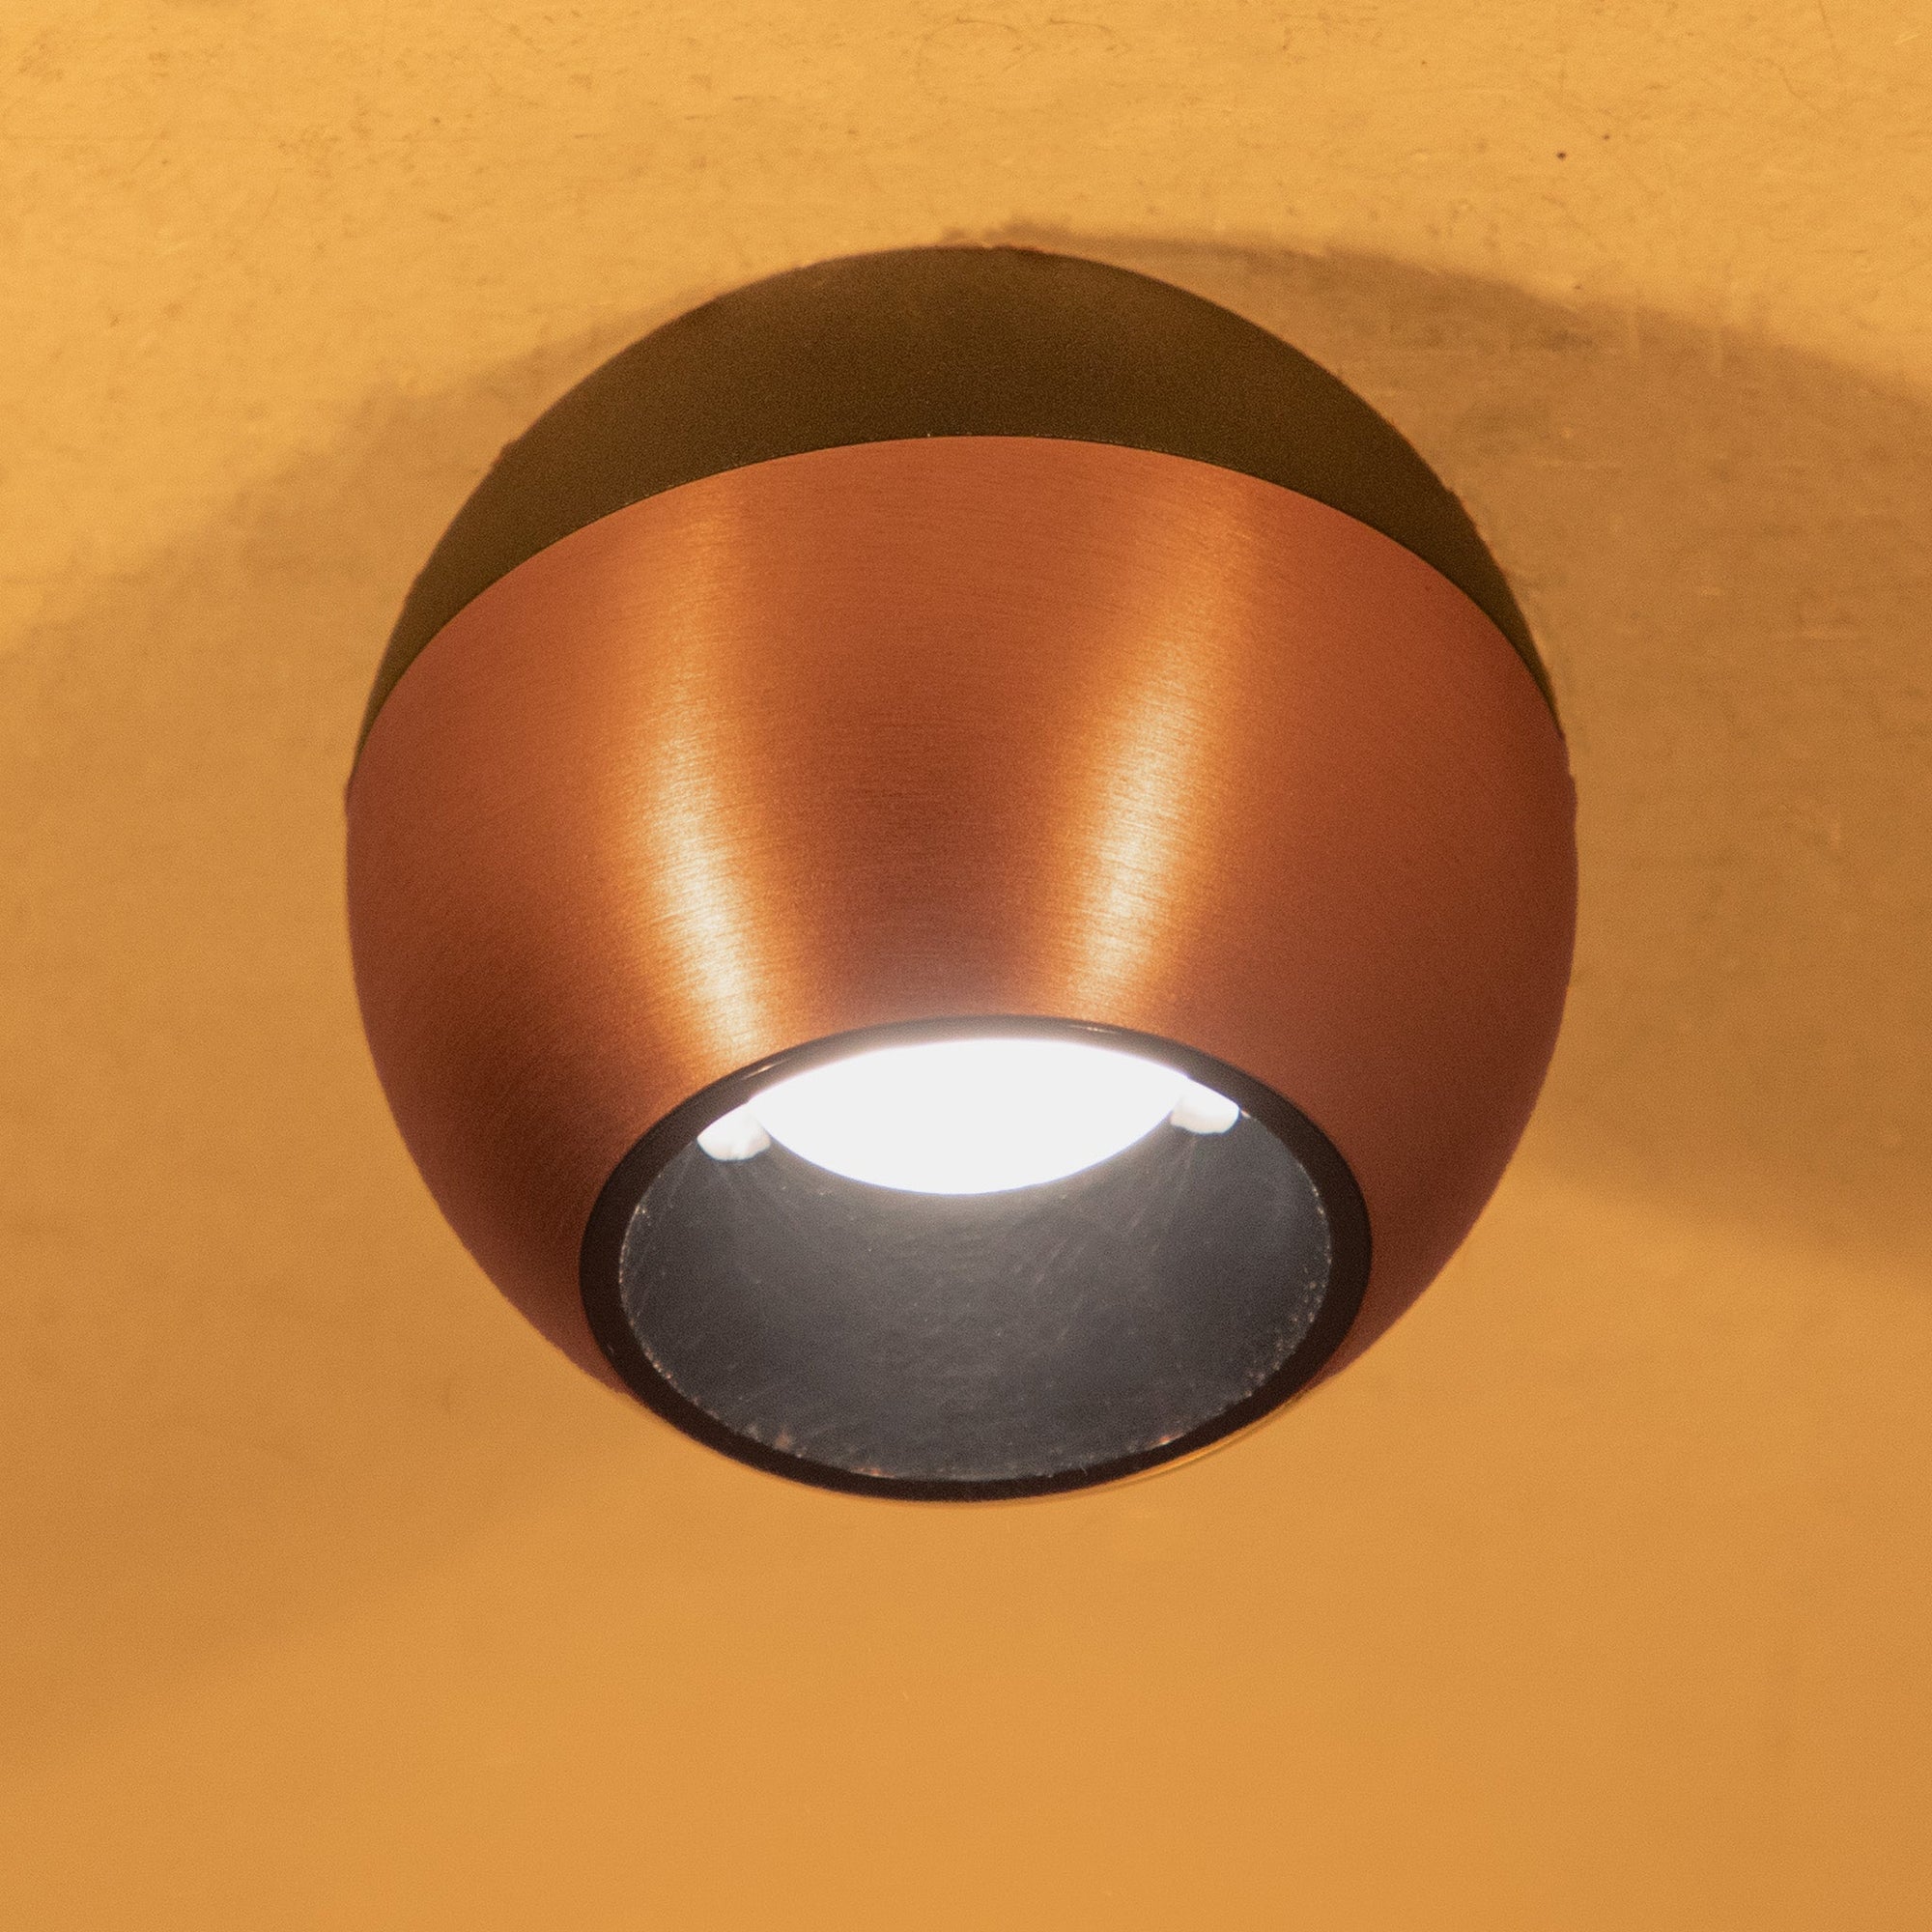 NXT Black Copper LED Ceiling Light online